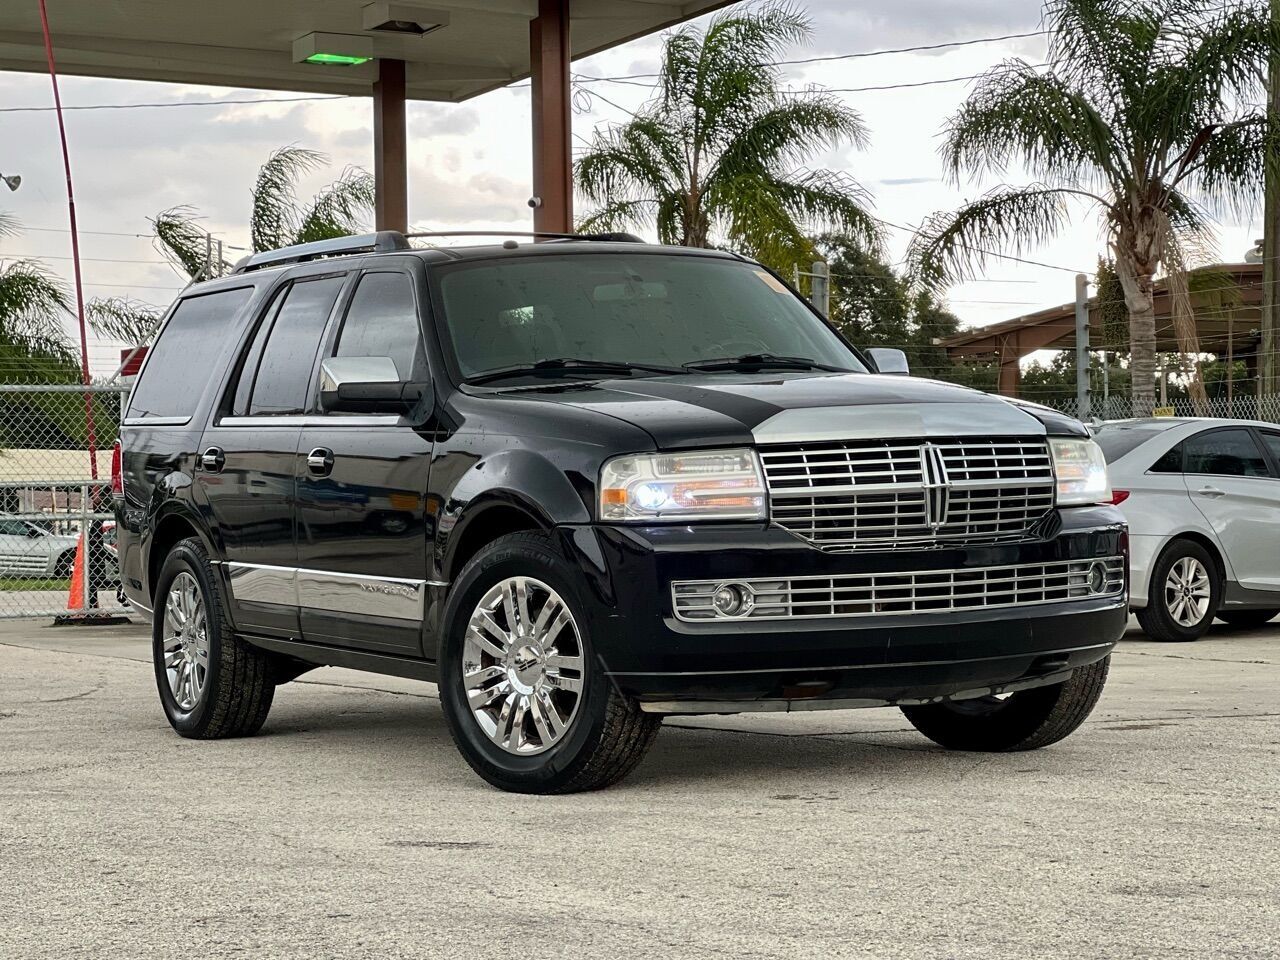 2008 Lincoln Navigator For Sale In Florida - Carsforsale.com®